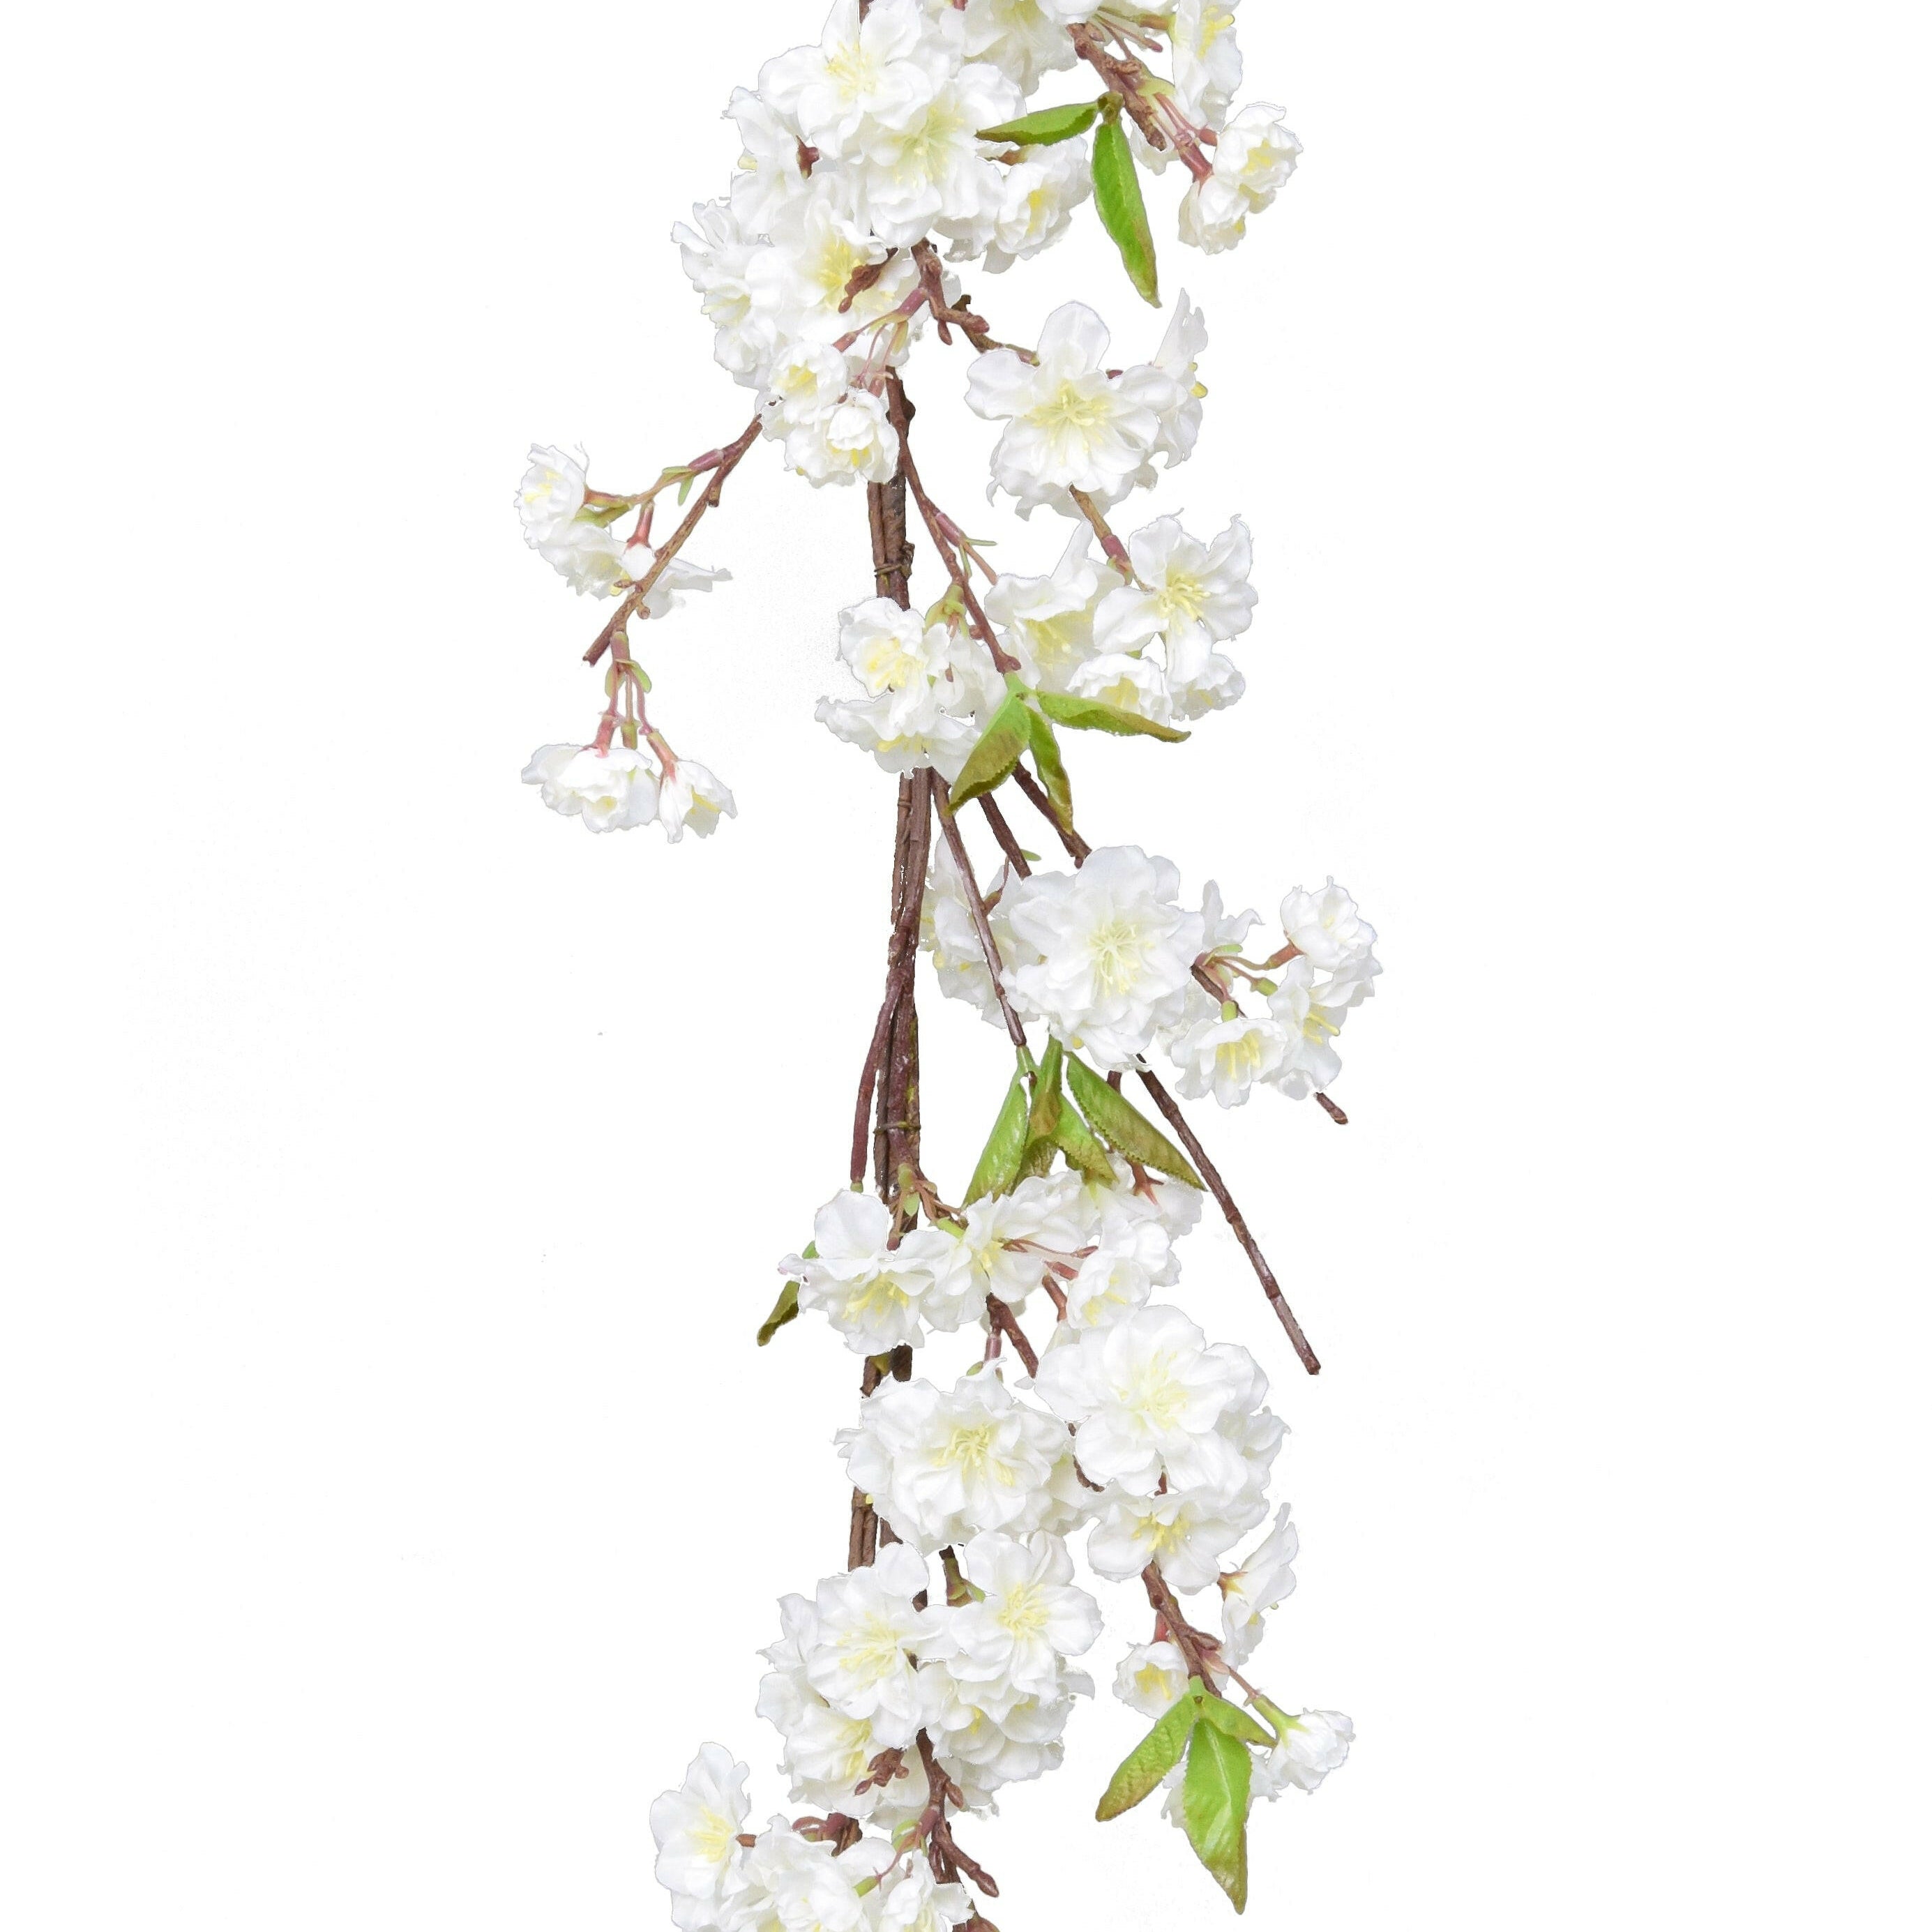 Artificial Silk Cherry Blossom Garland